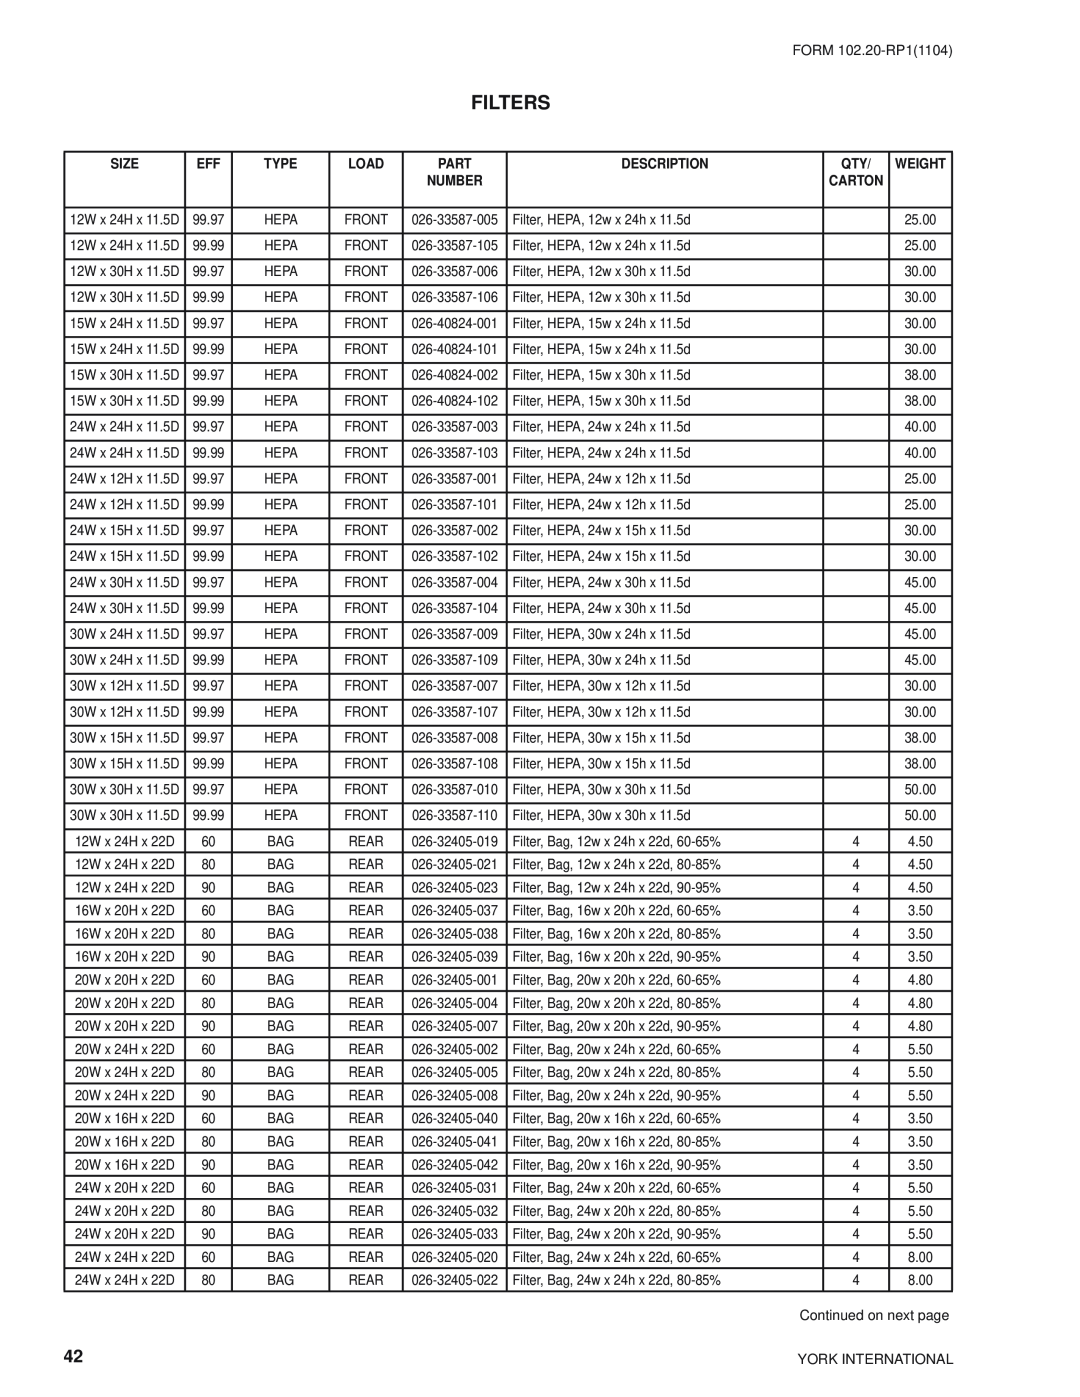 York LDO9688, LDO9624 manual Filters, Part, Description, Weight, Number 